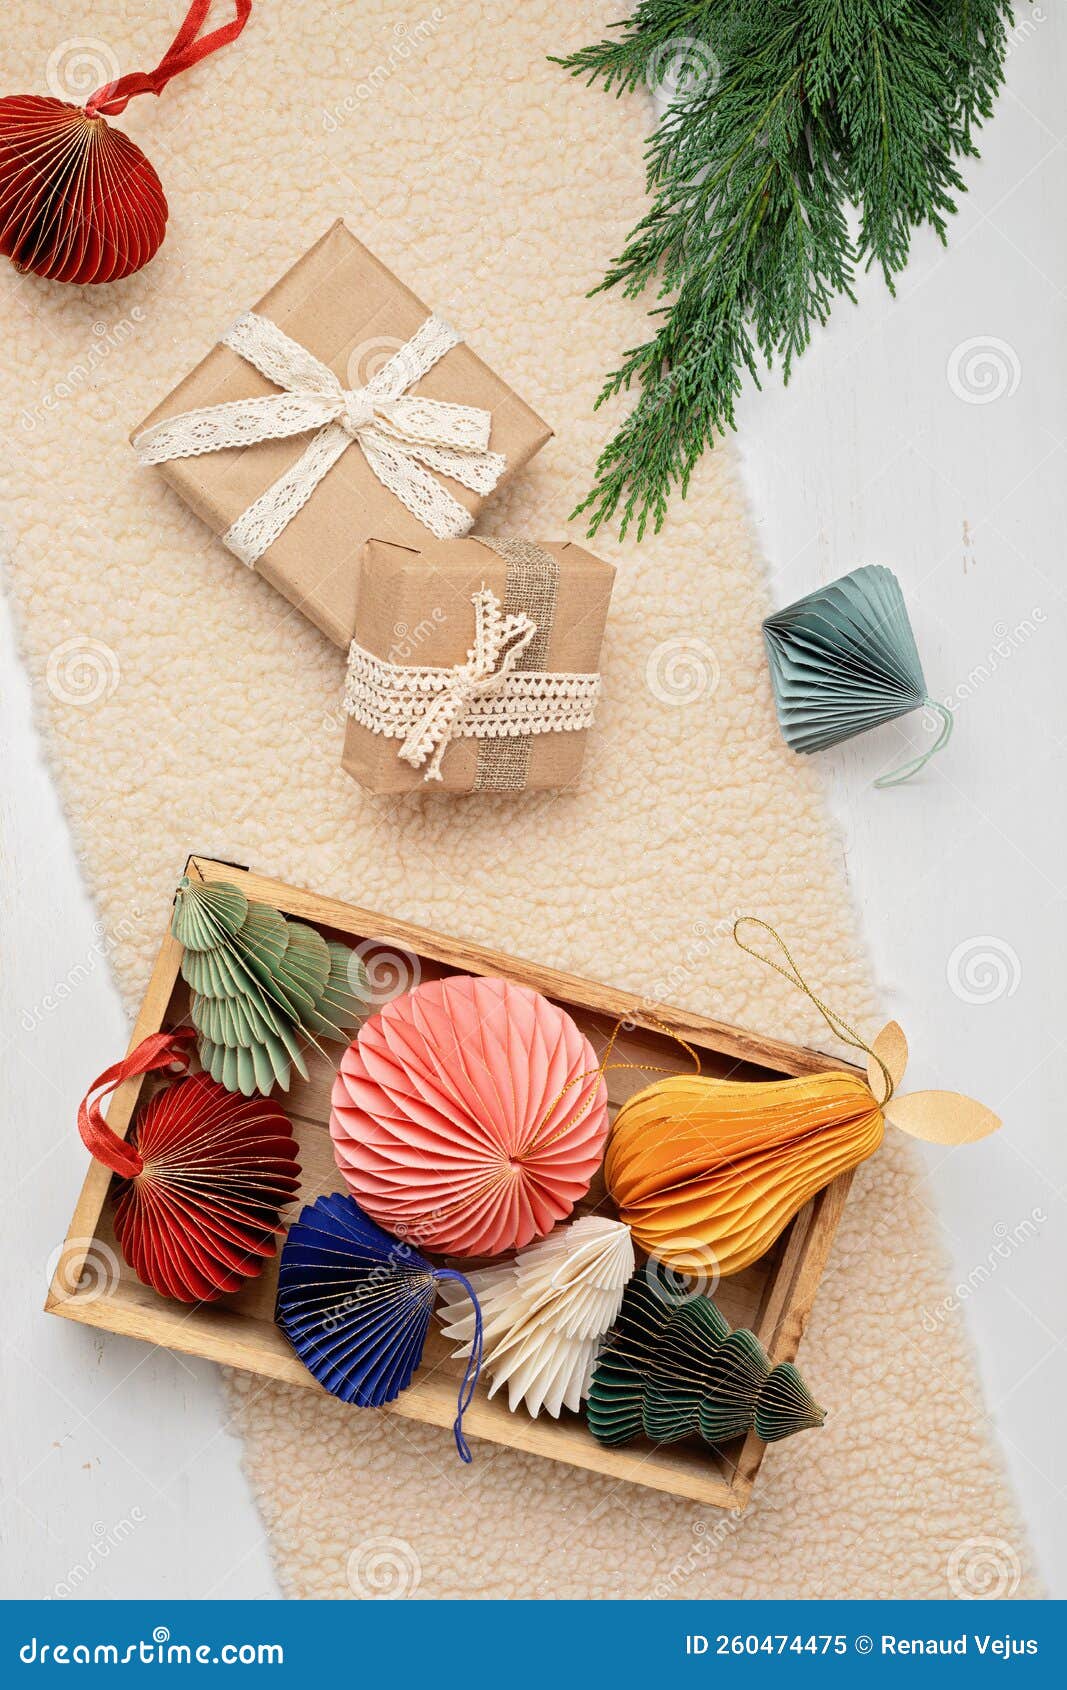 https://thumbs.dreamstime.com/z/scandinavian-christmas-paper-honeycomb-ornaments-gifts-scandinavian-christmas-paper-honeycomb-ornaments-box-gifts-260474475.jpg